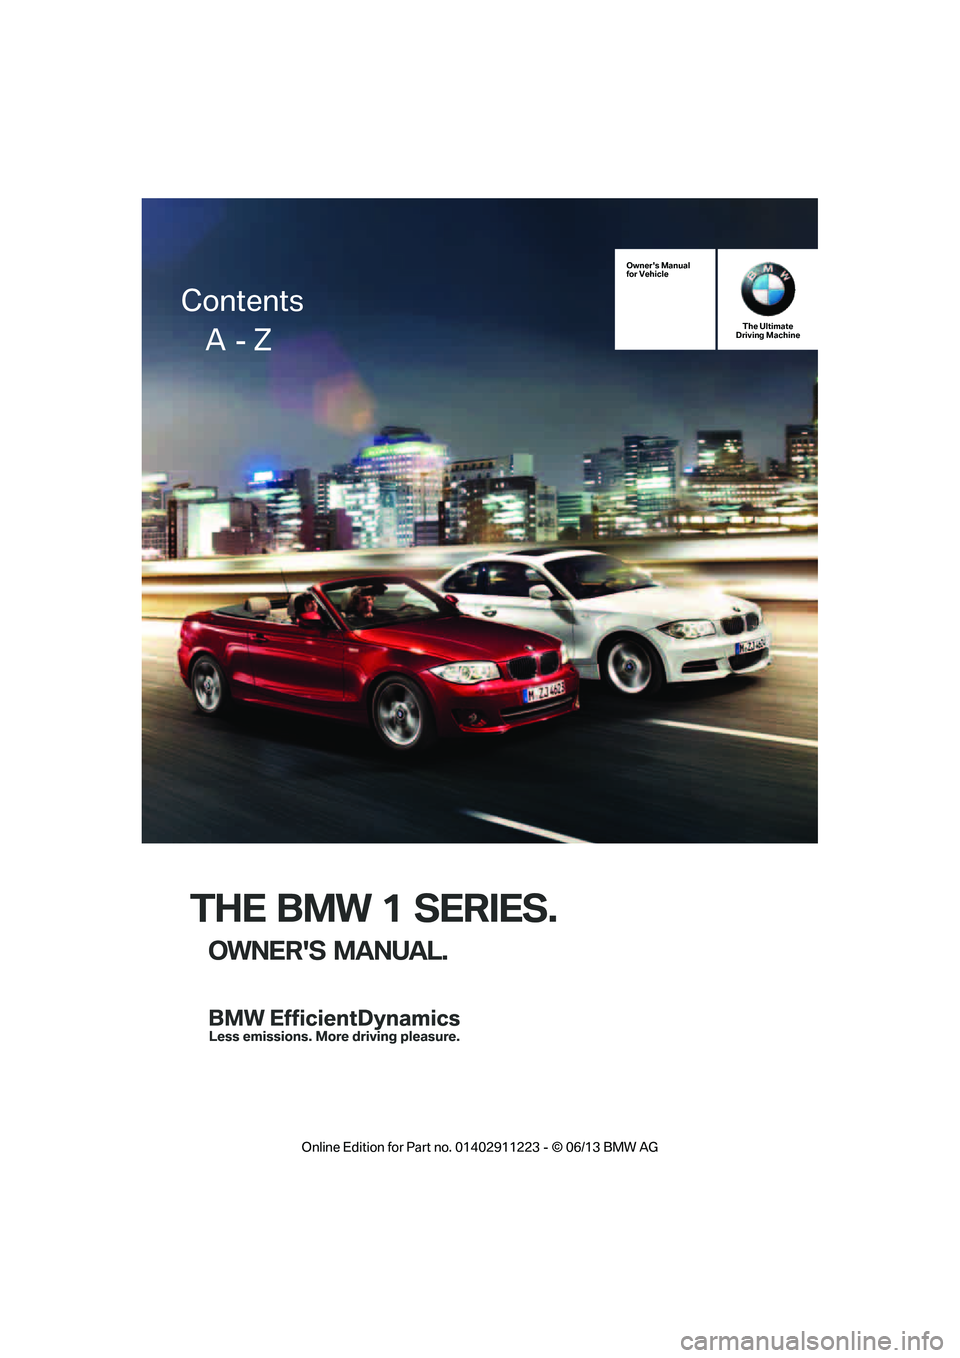 BMW 128I COUPE 2013  Owners Manual THE BMW 1 SERIES.
OWNERS MANUAL.
Owners Manual
for VehicleThe Ultimate
Driving Machine
Contents
     A  - Z

�2�Q�O�L�Q�H �(�G�L�W�L�R�Q �I�R�U �3�D�U�W �Q�R� ����������� � �